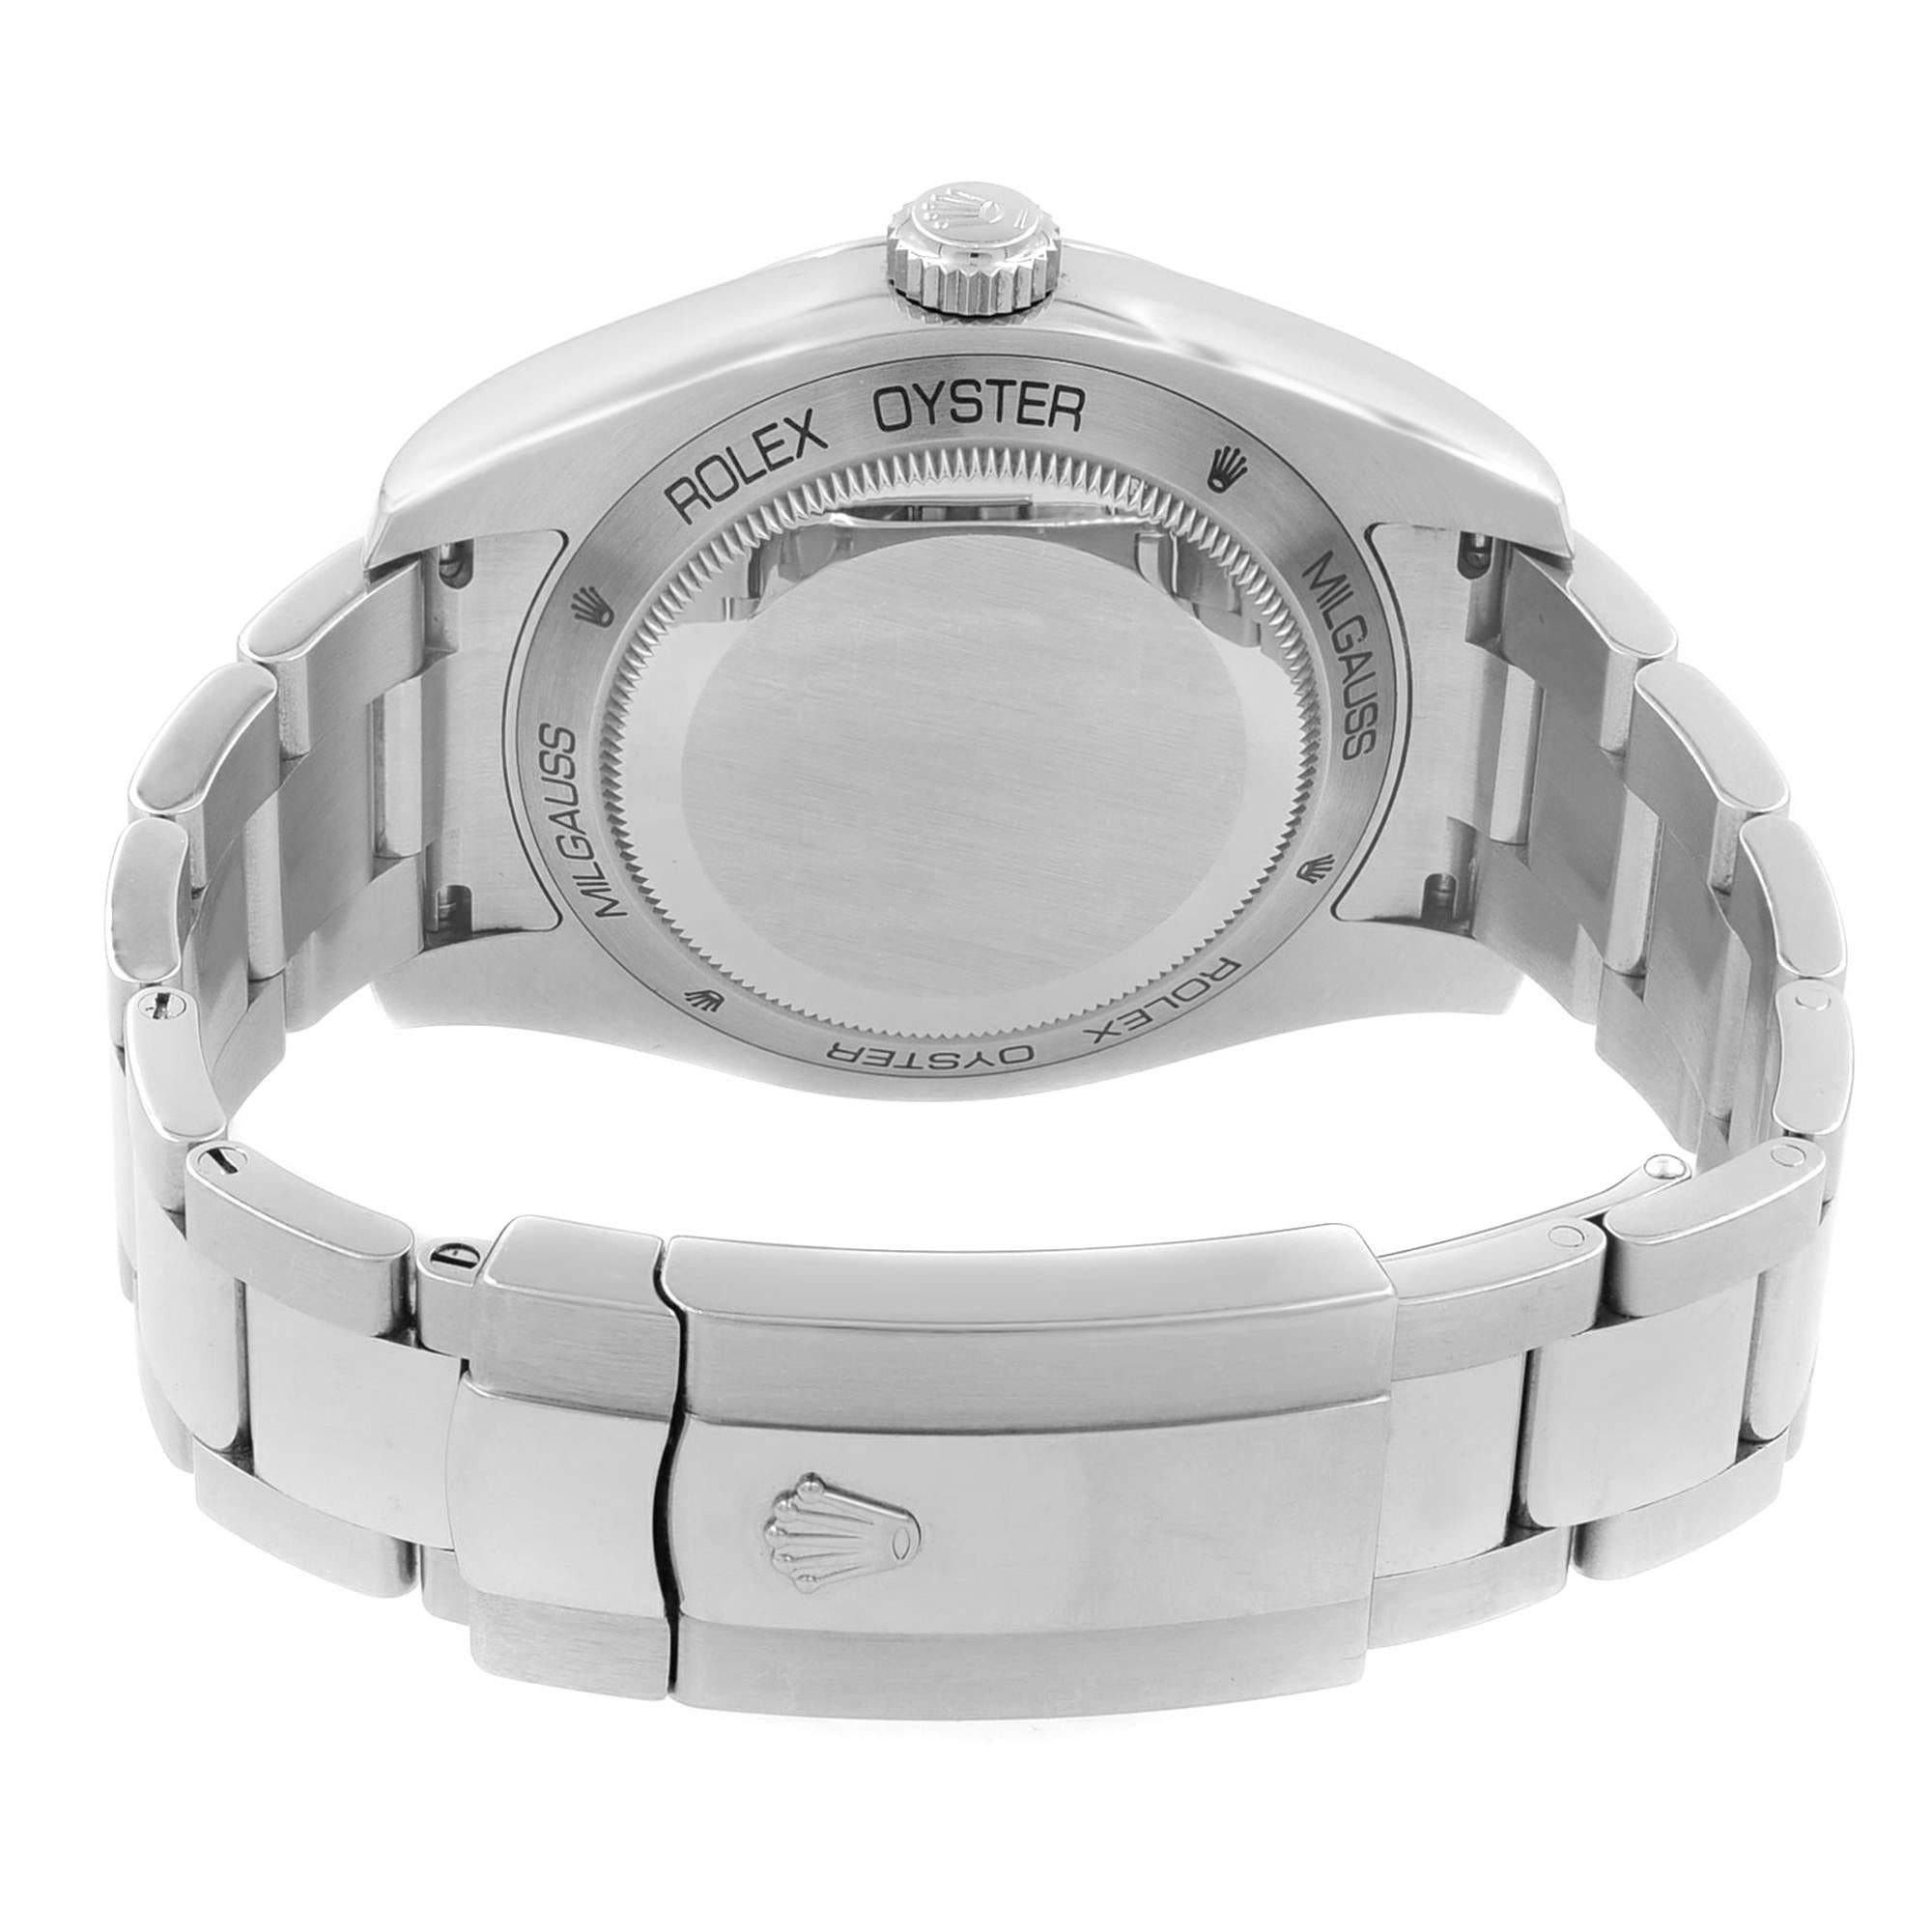 Rolex Milgauss Black Index Dial Orange Hand Automatic Steel Men's Watch 116400GV 1